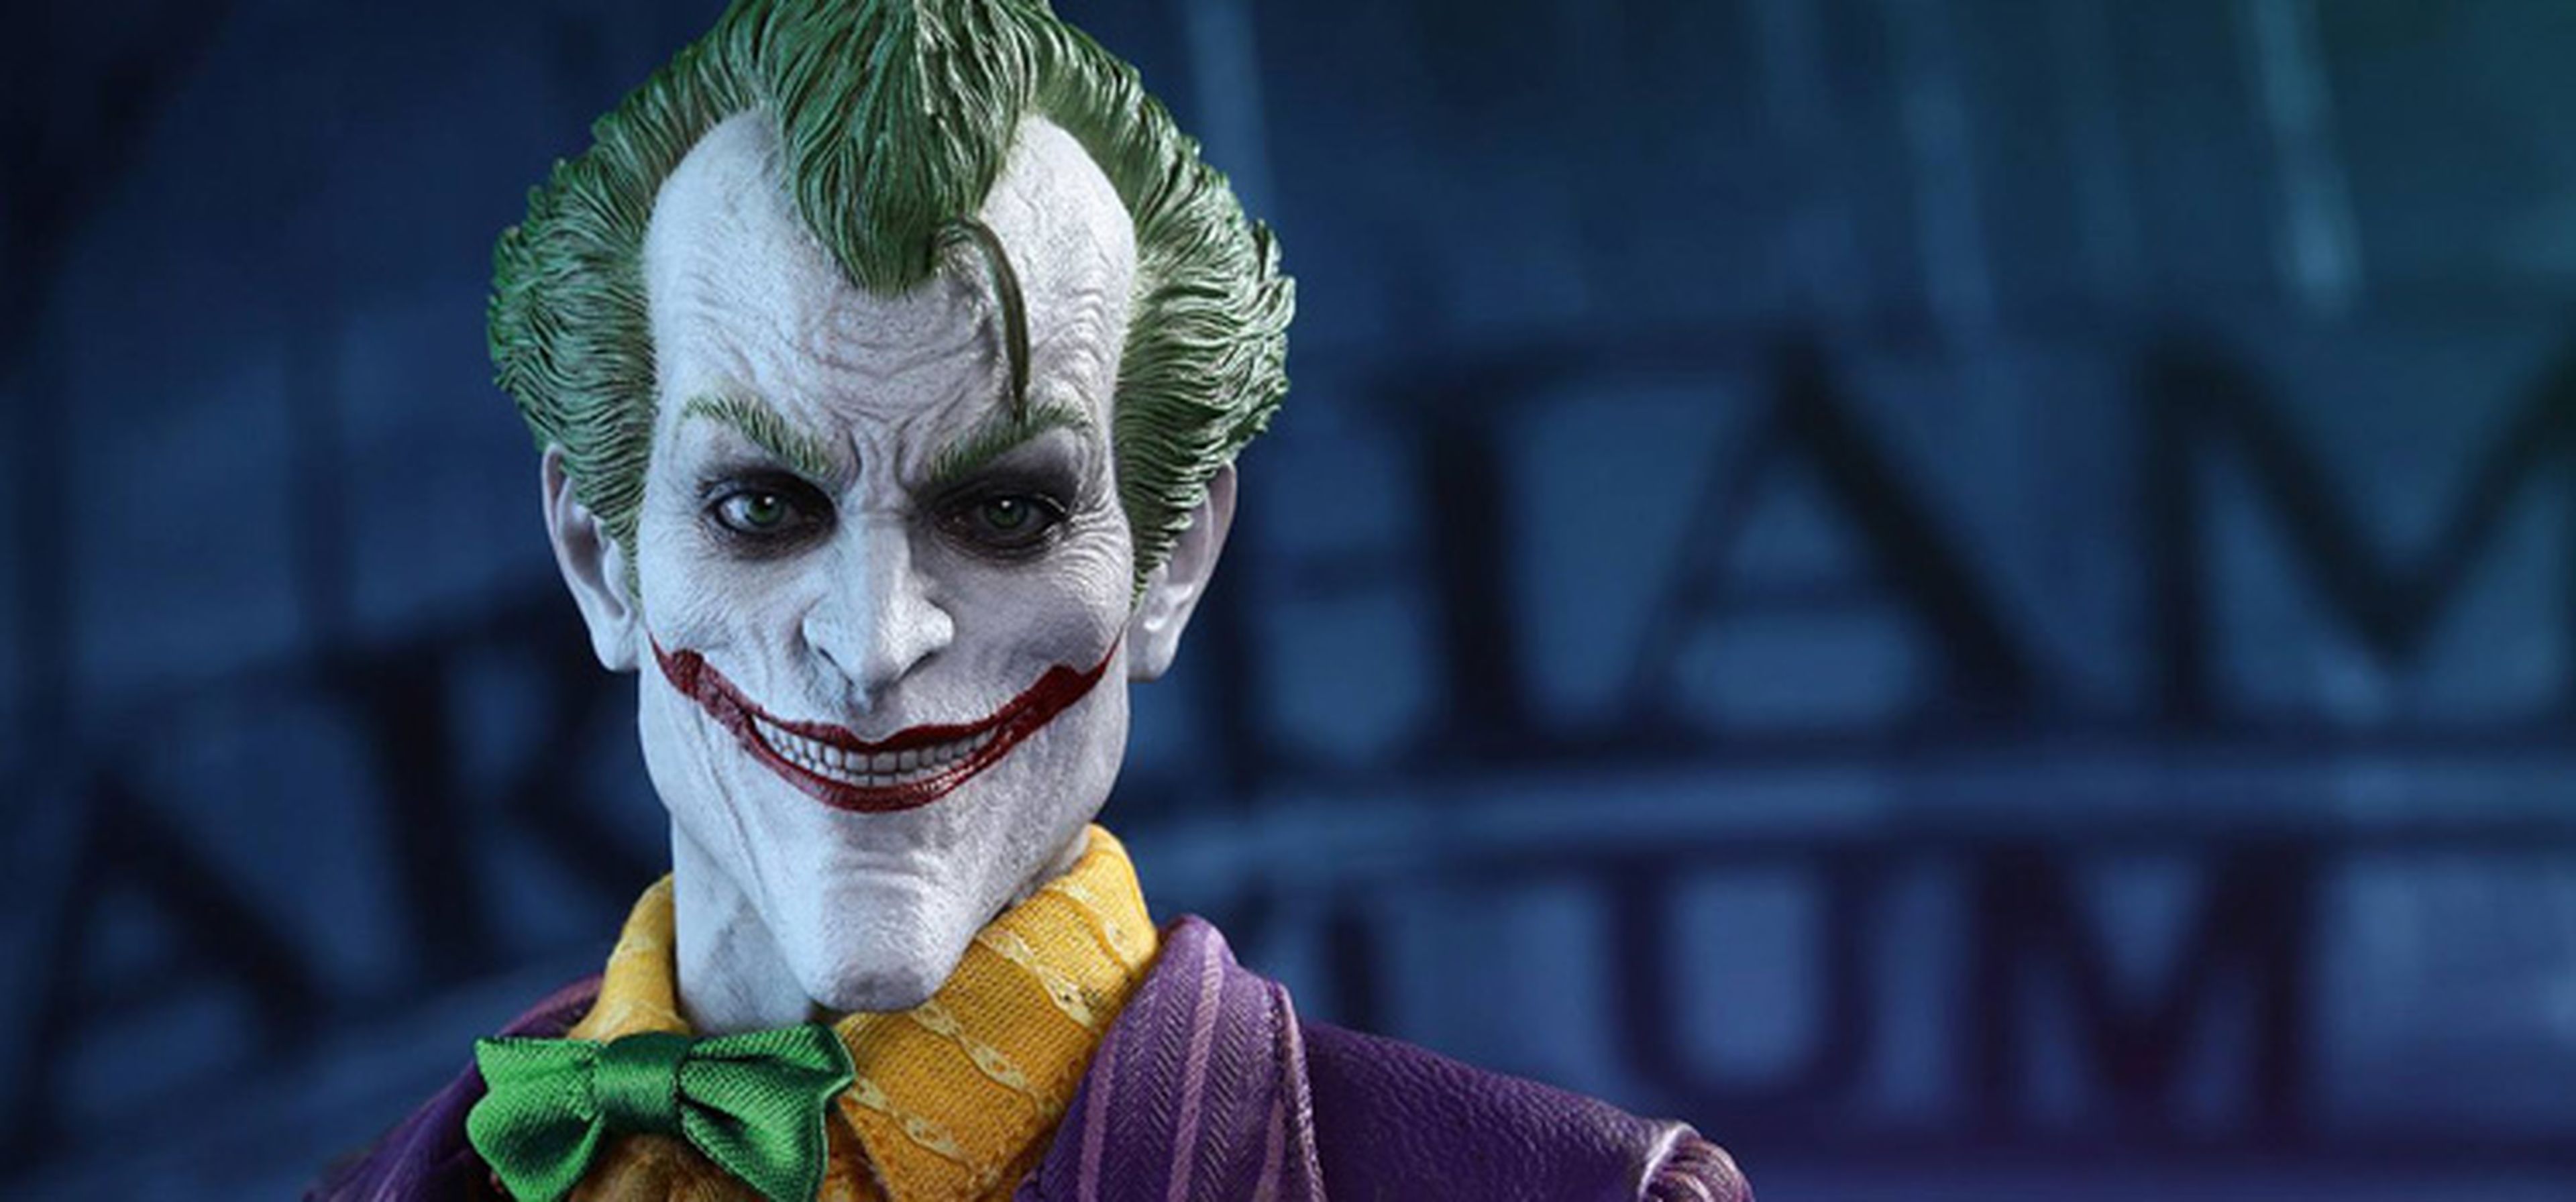 Figura del Joker